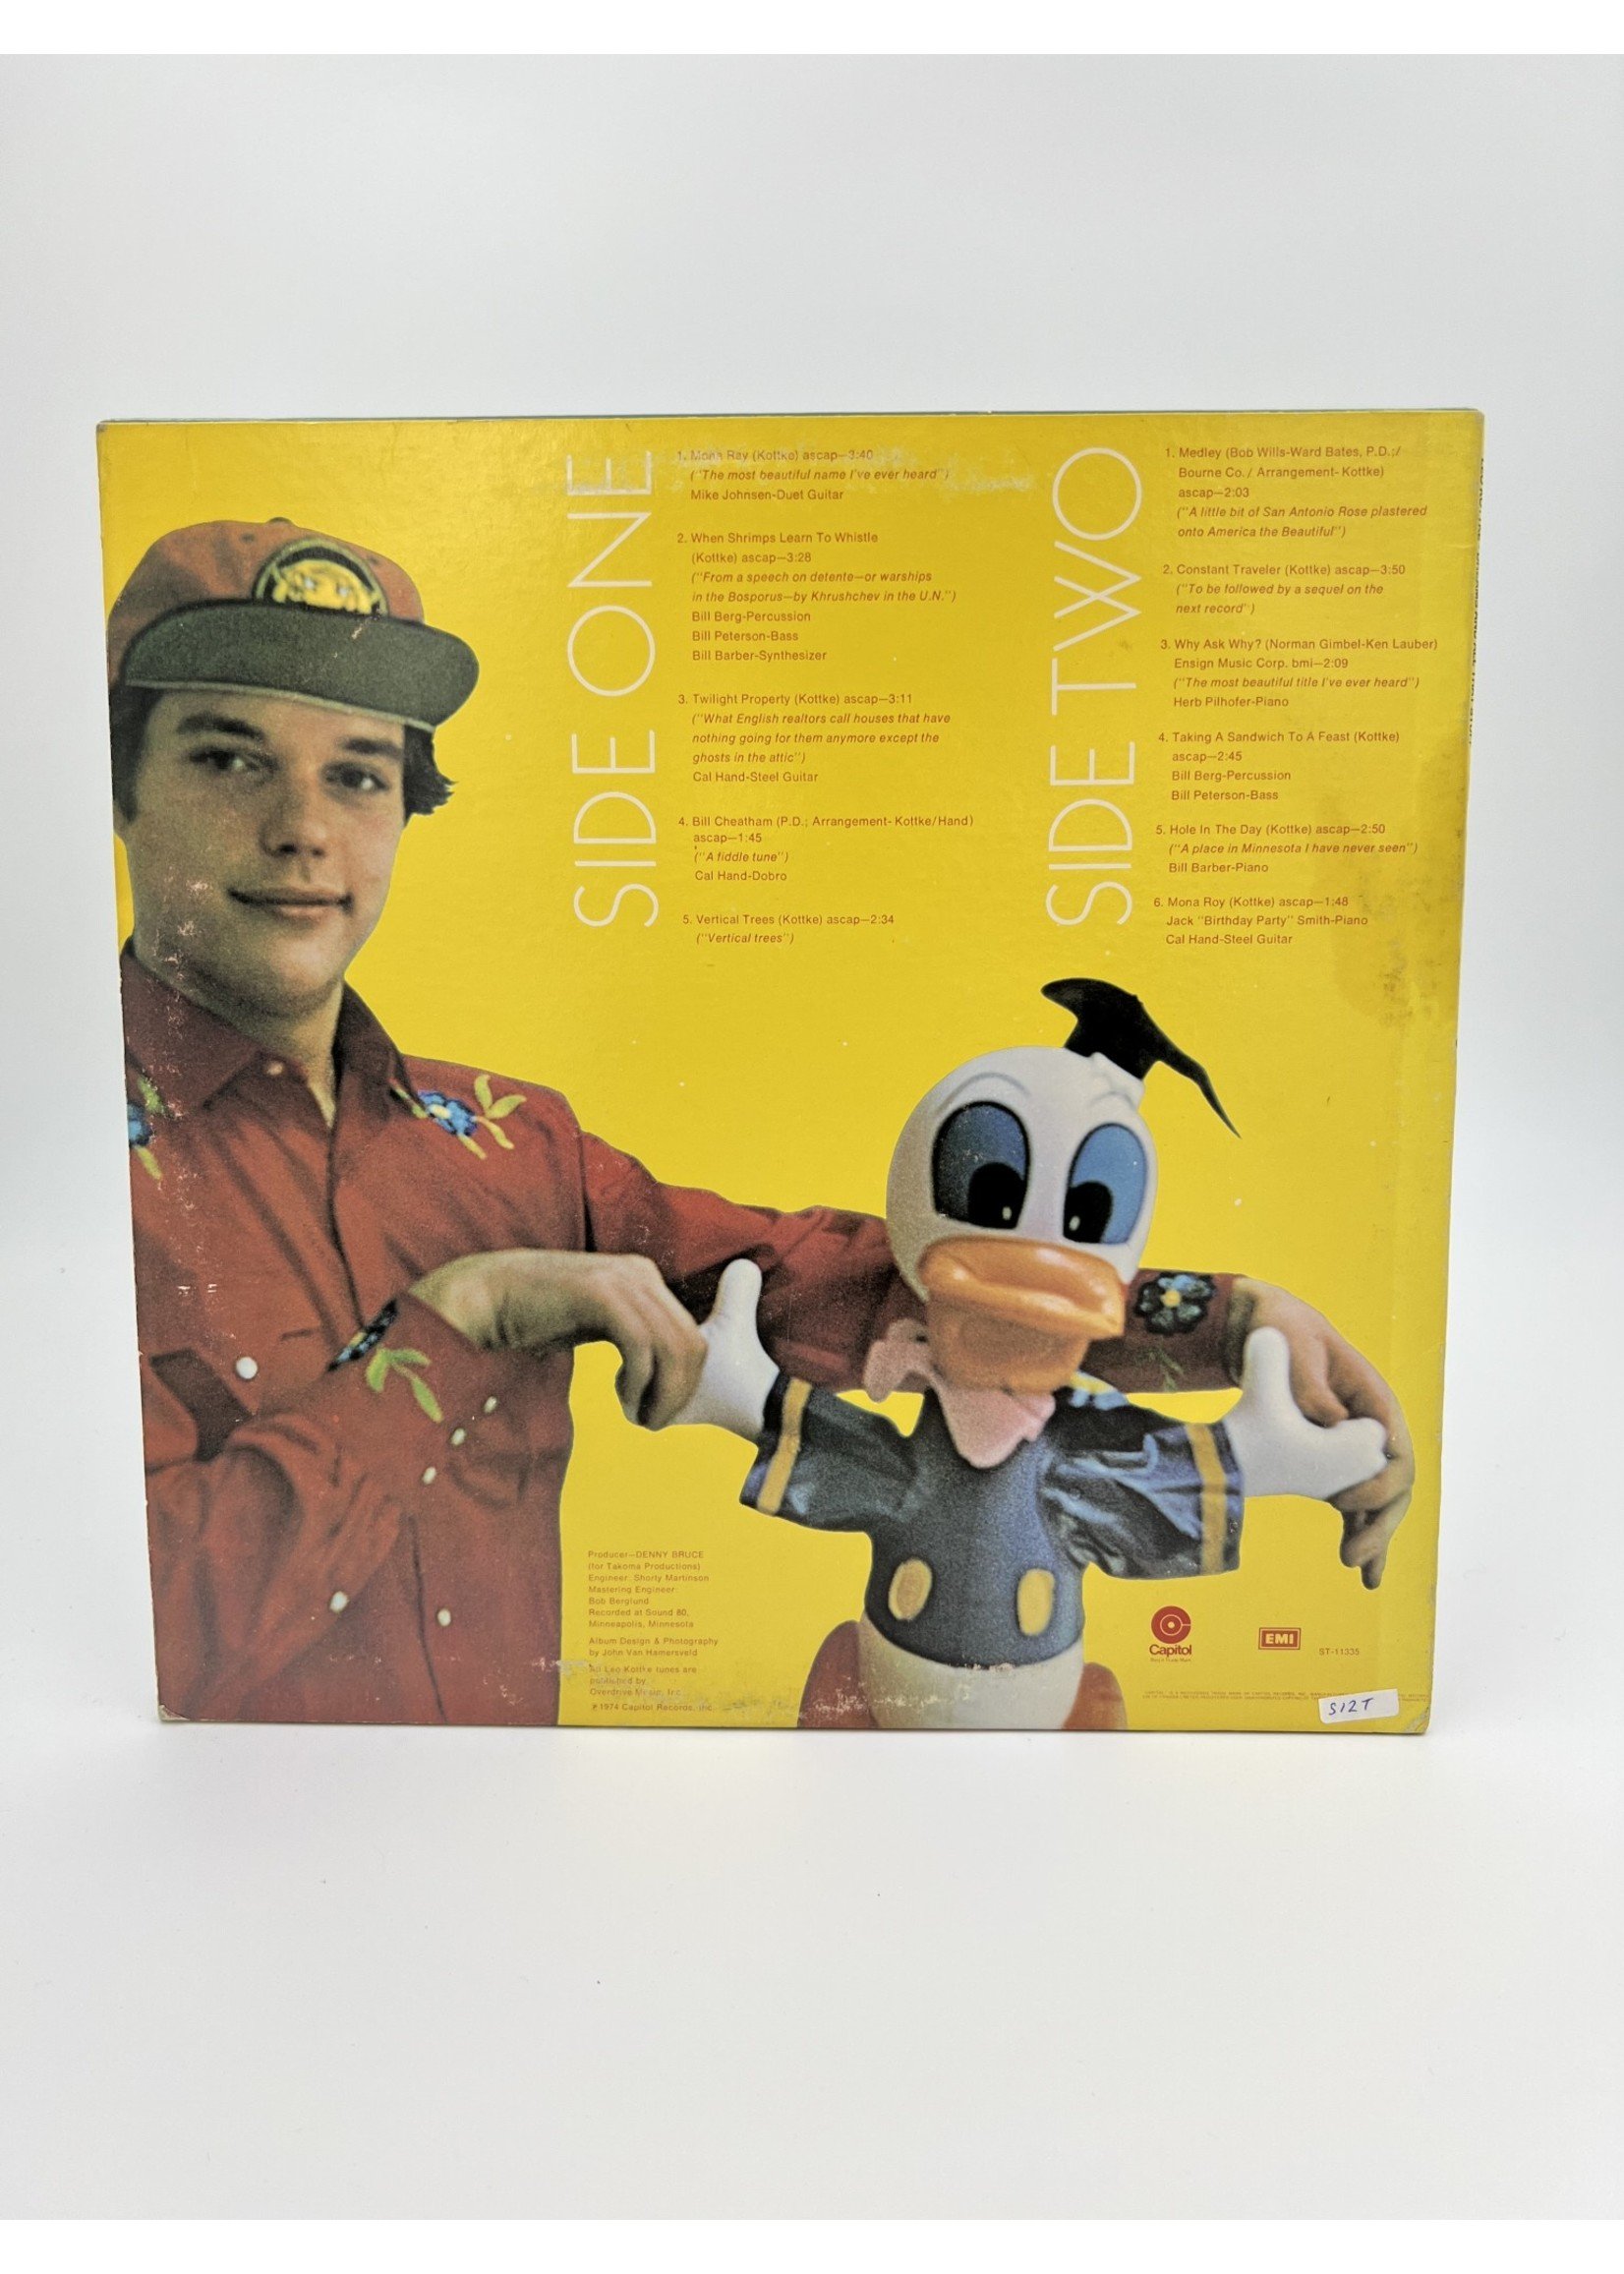 LP Leo Kottke Dreams And All That Stuff LP RECORD